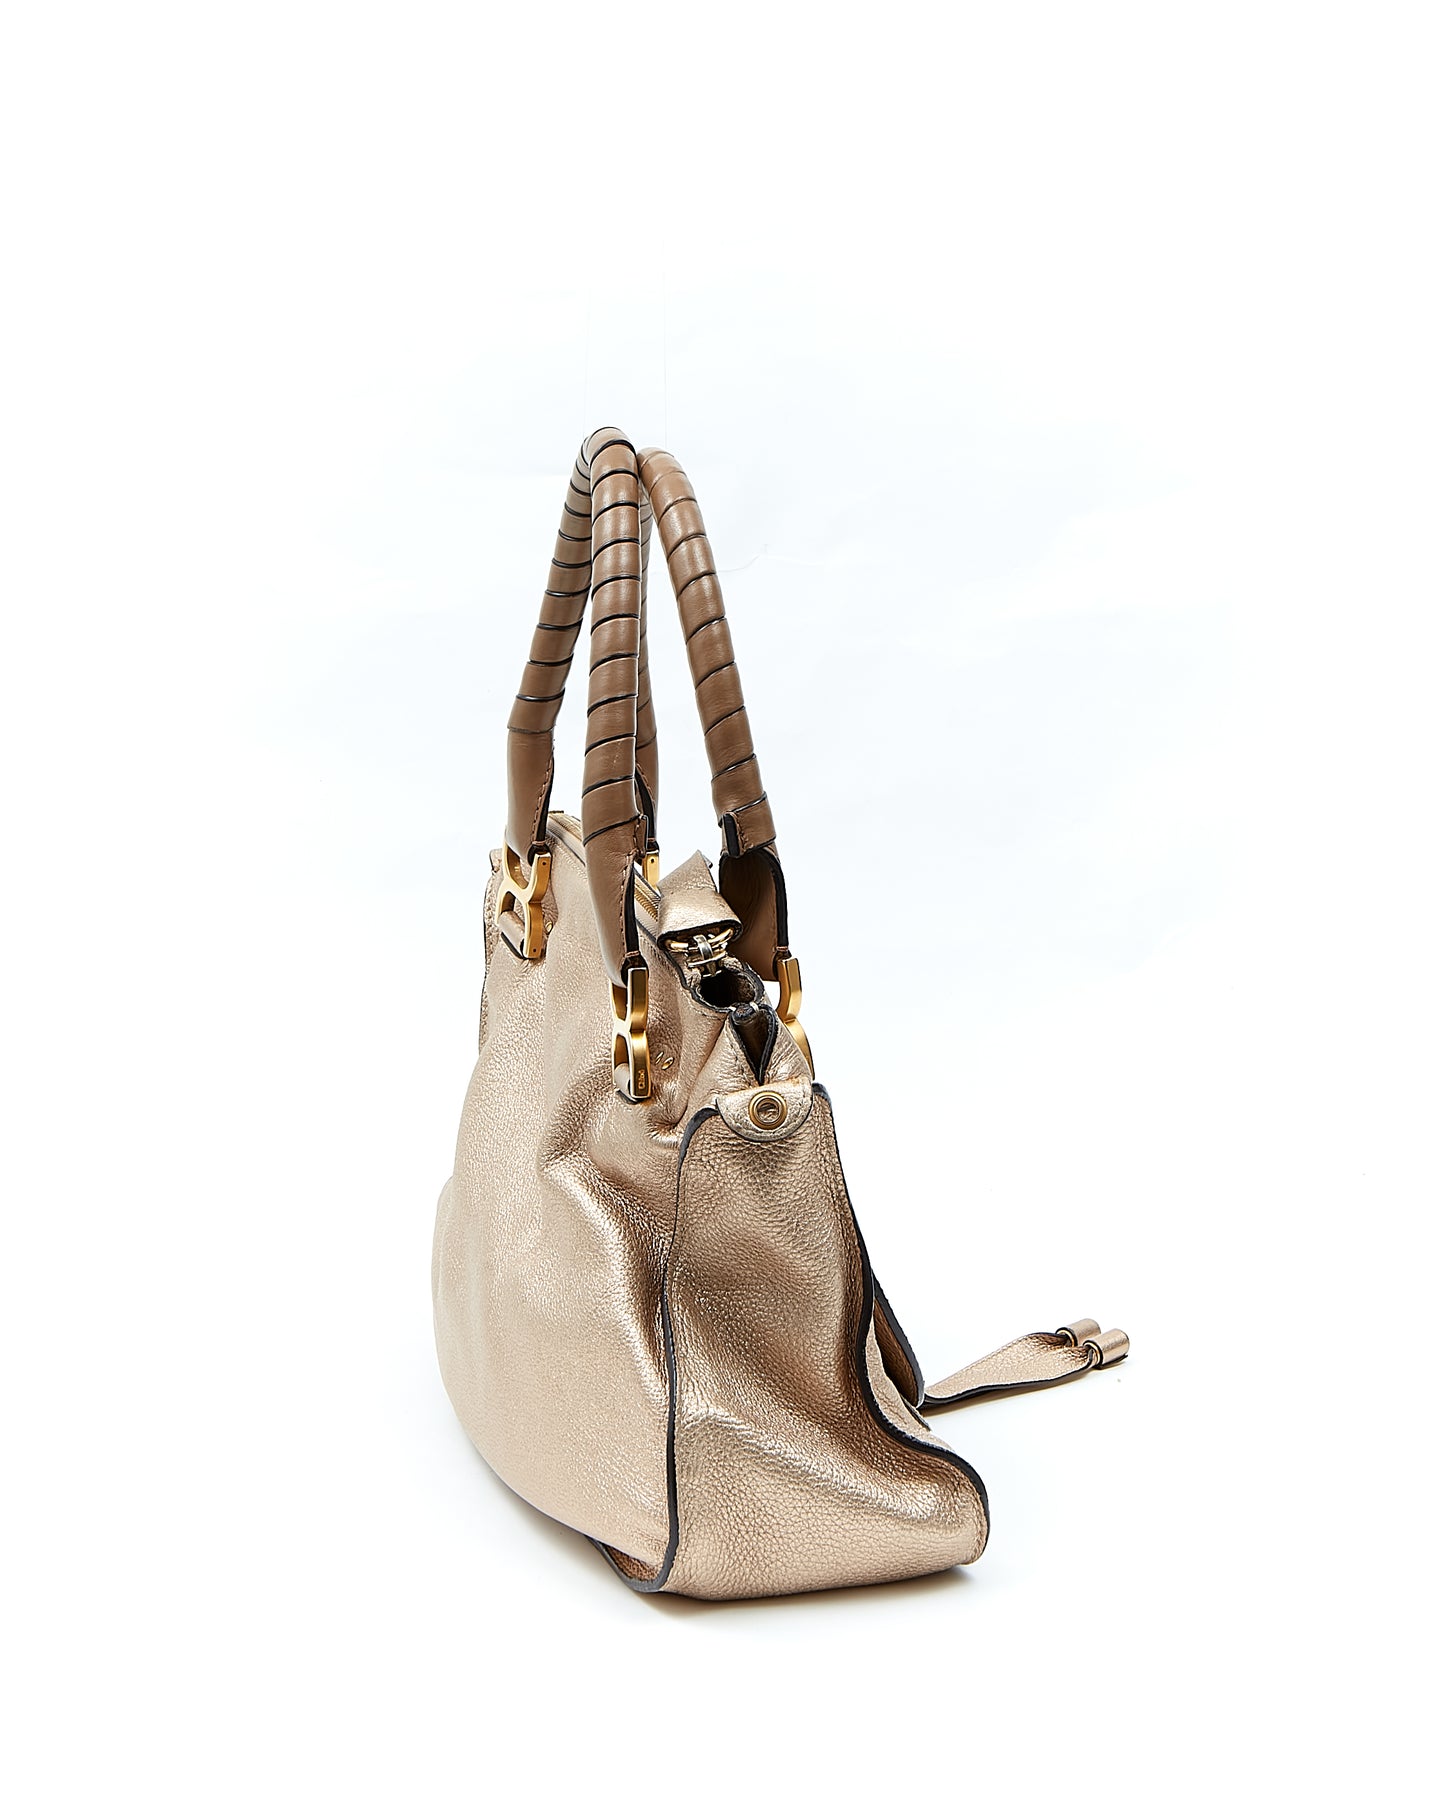 Chloe Metallic Gold Marcie Shoulder Convertible Bag